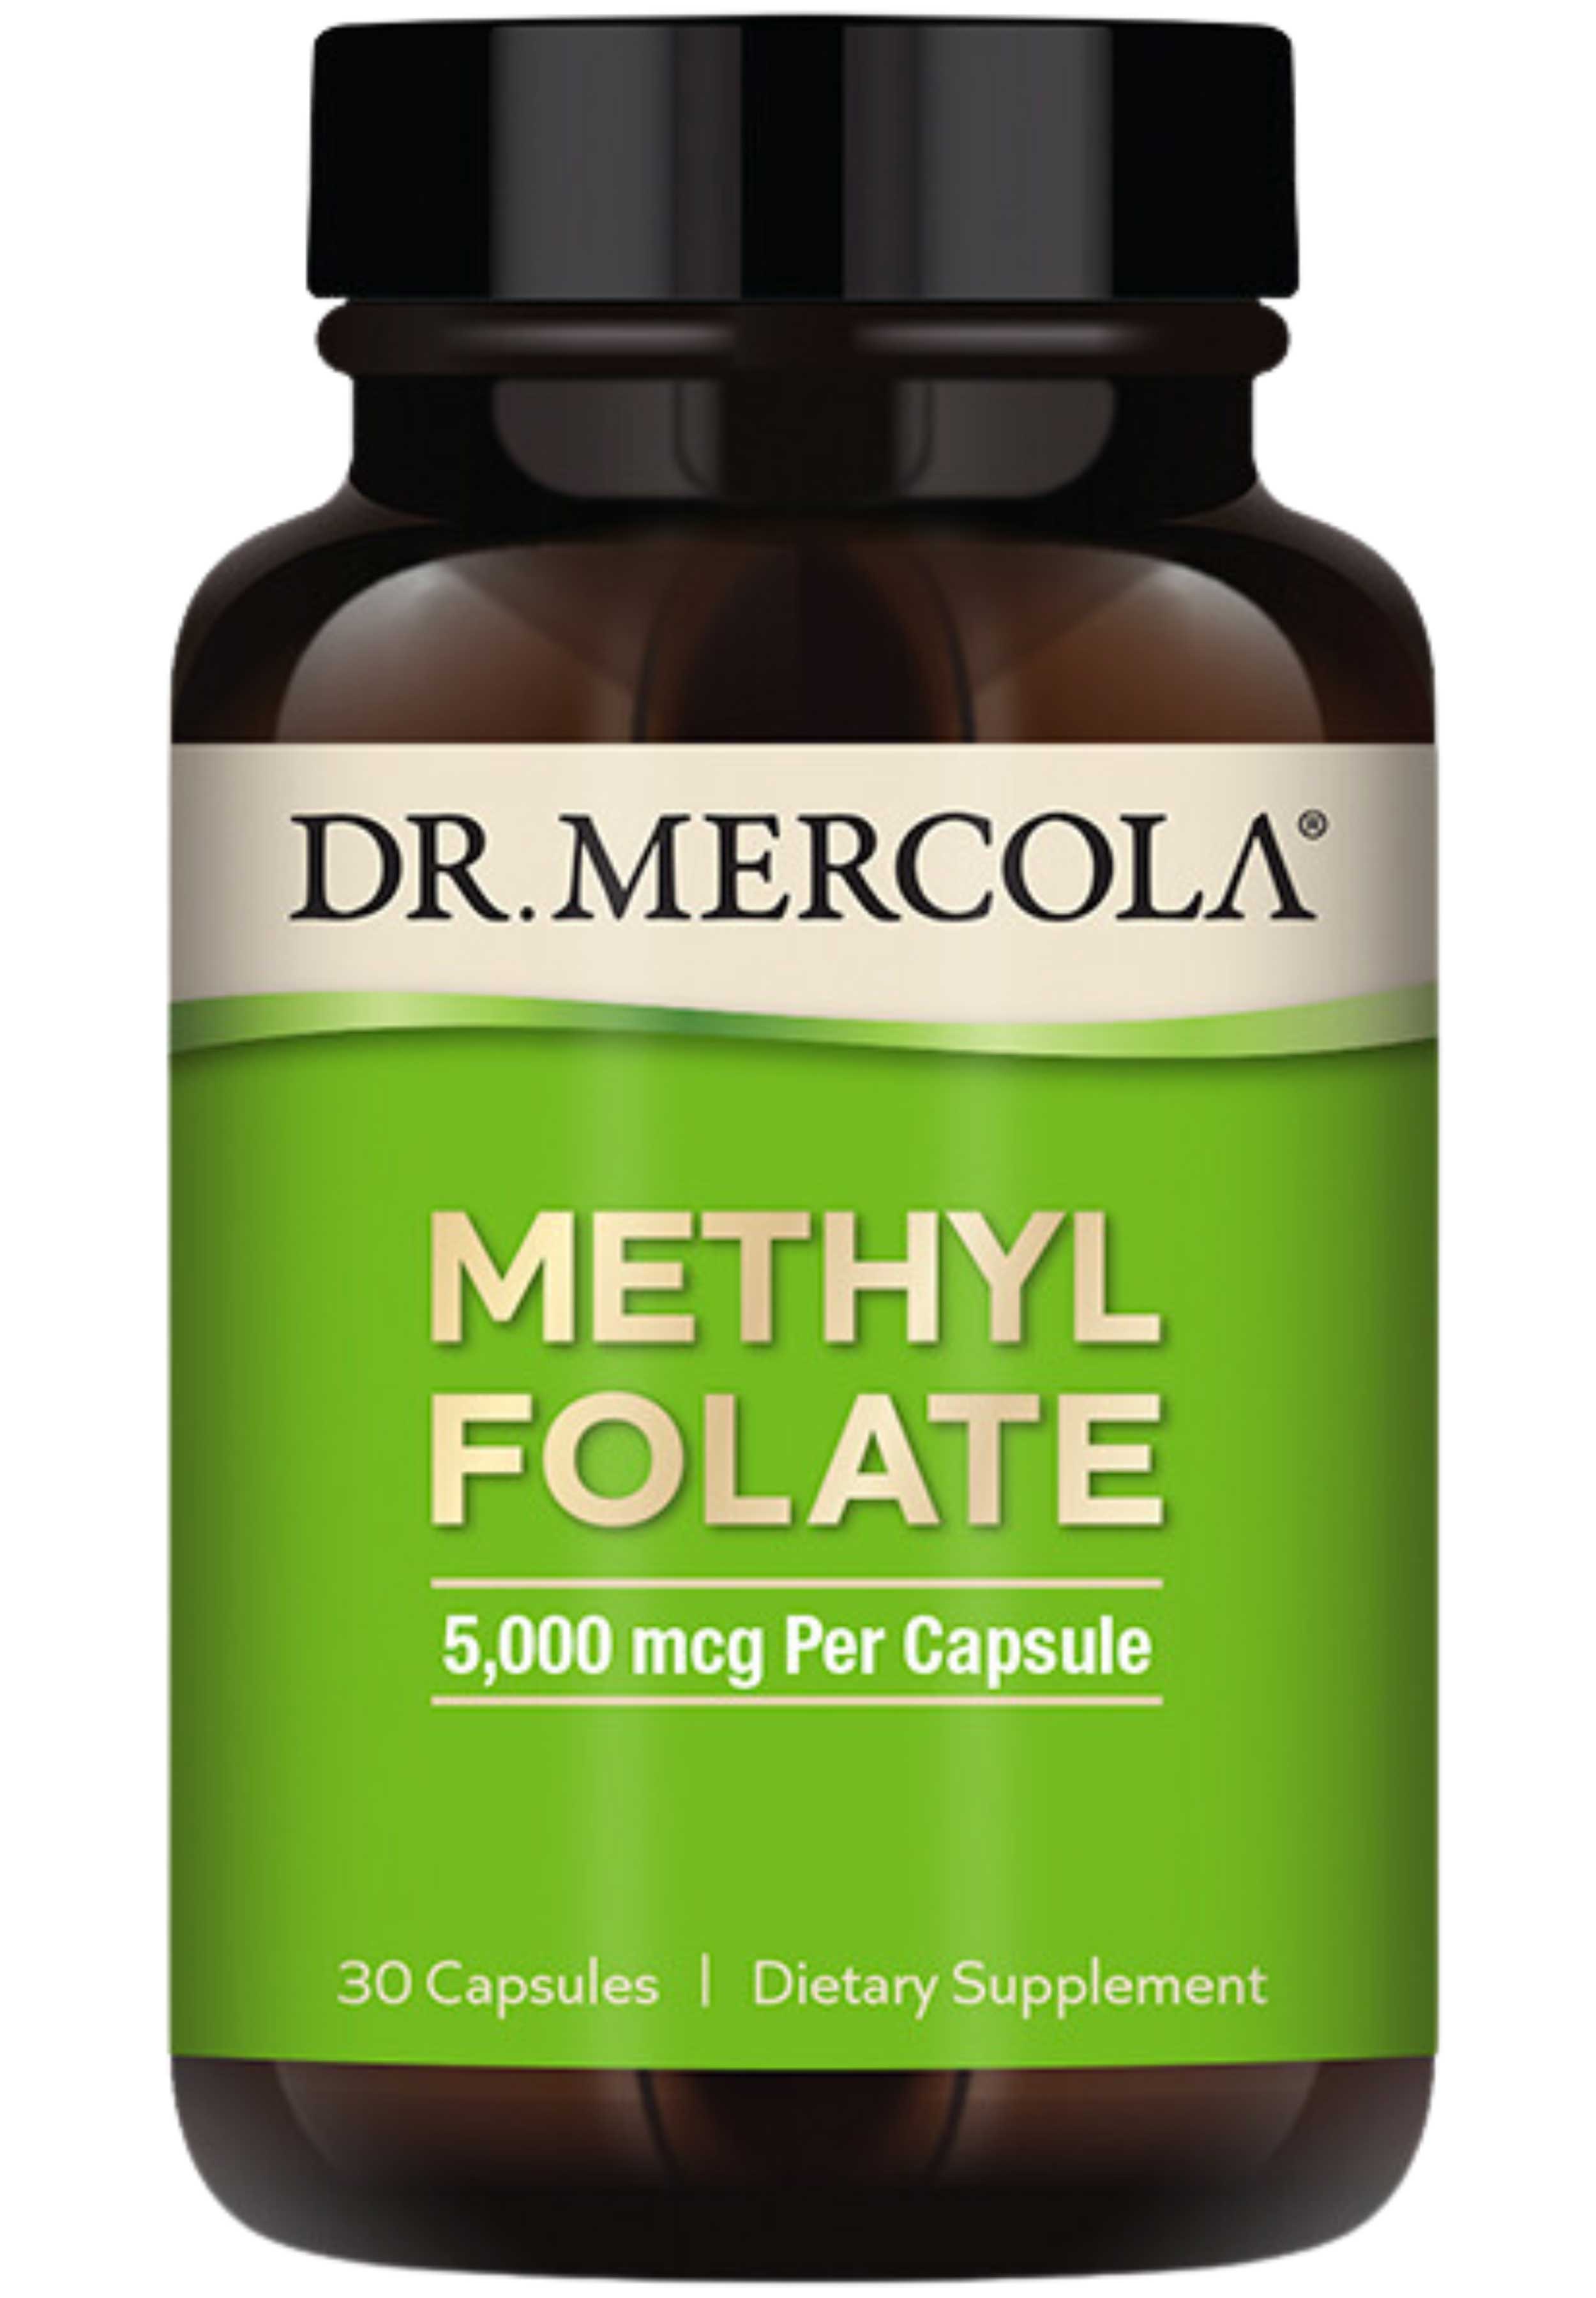 Dr. Mercola Methyl Folate 5,000 mcg